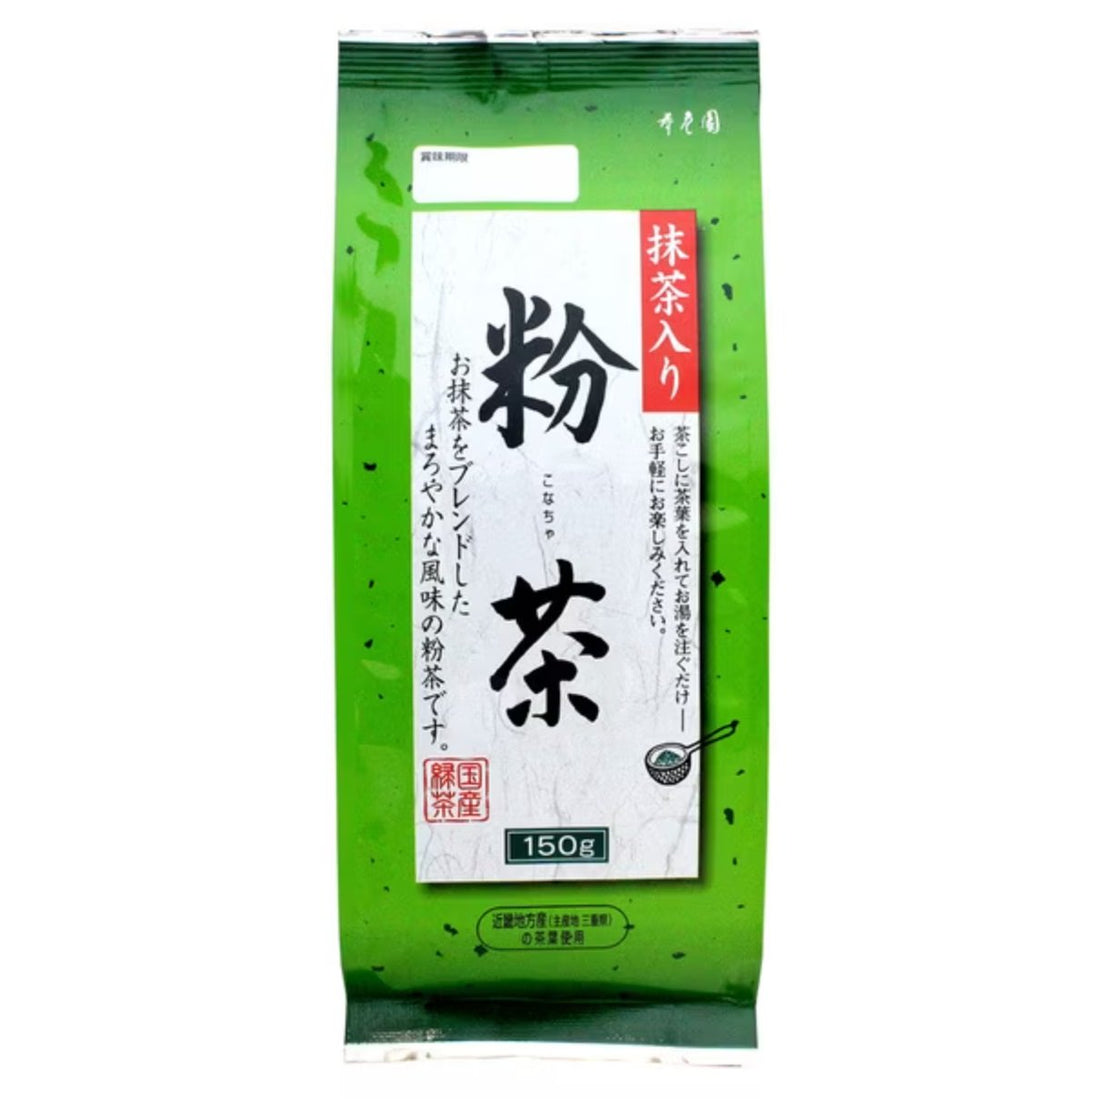 Juroen matcha powder tea 150g - NihonMura